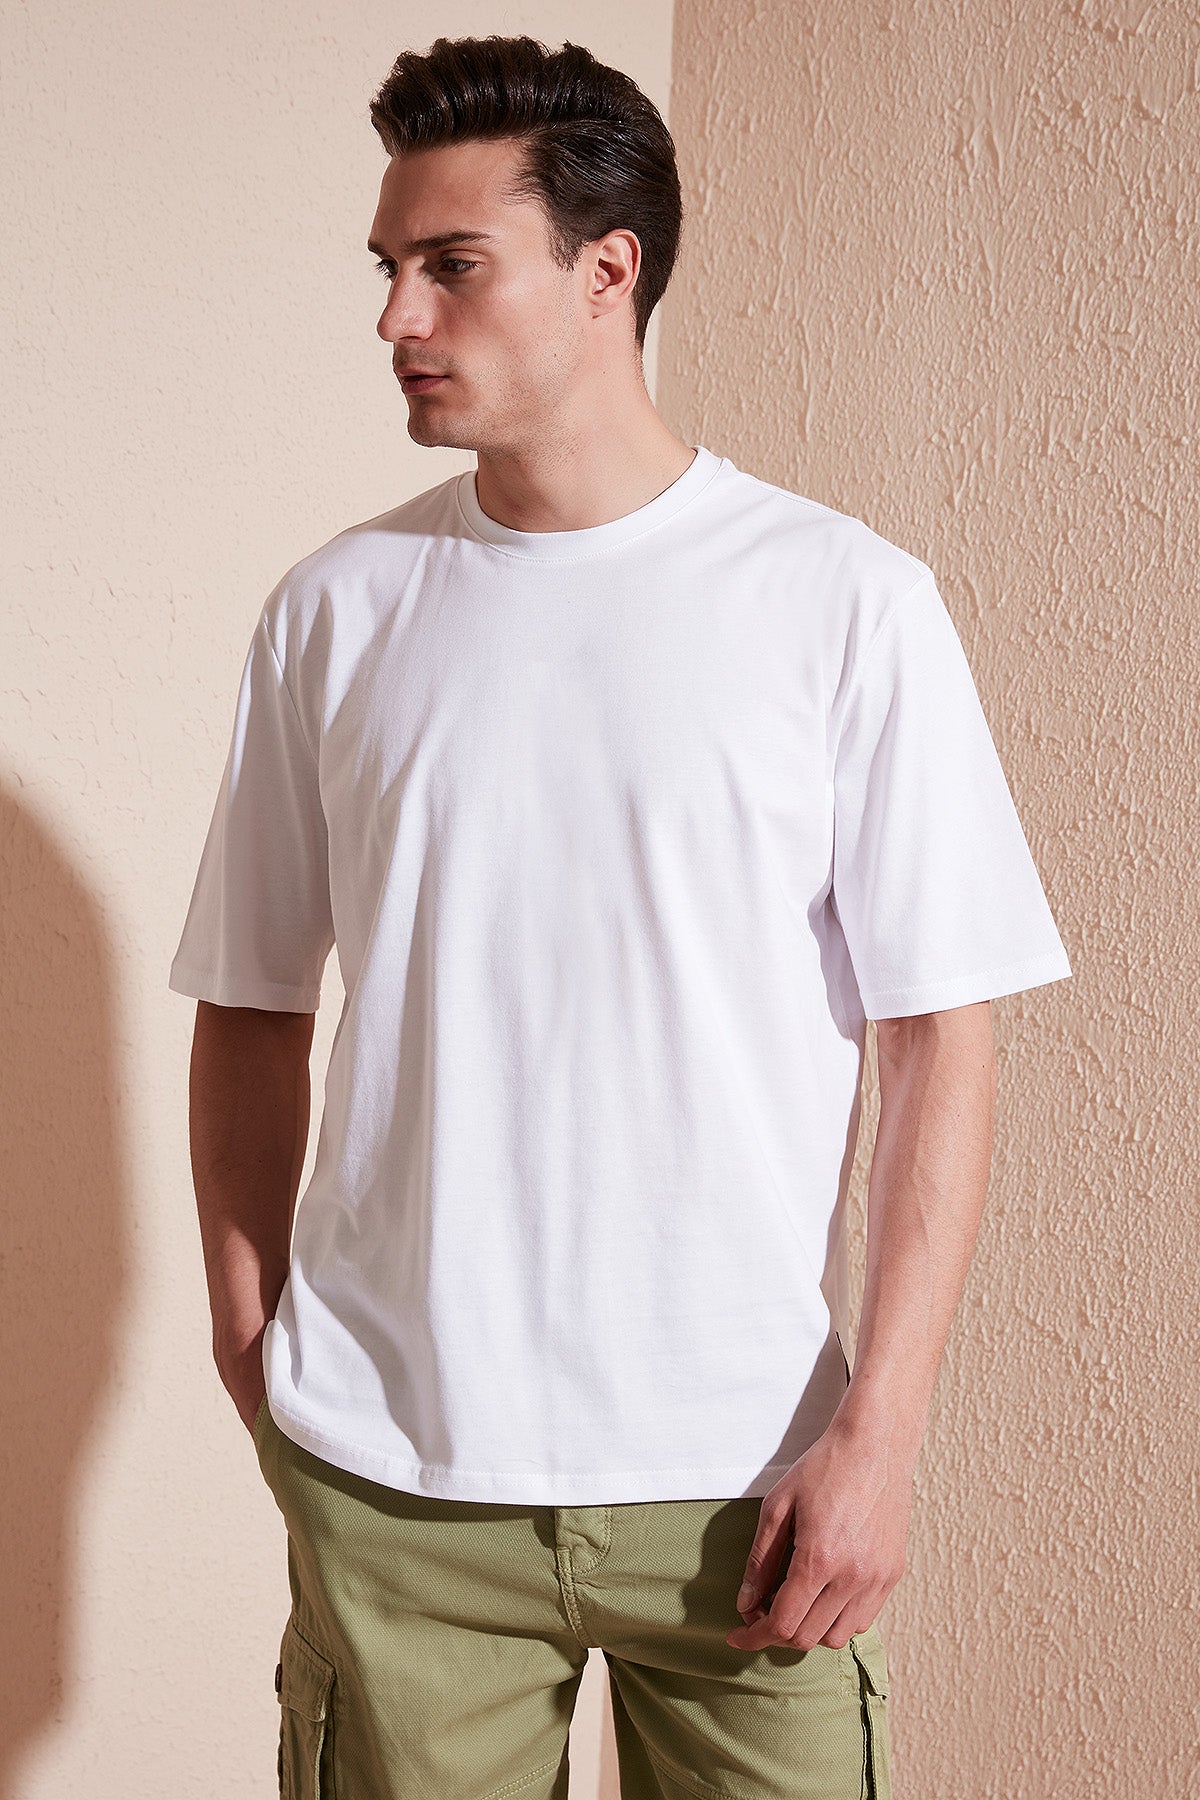 Buratti 100% Cotton Back Printed Oversized Crew Neck Men's T Shirt - MINK